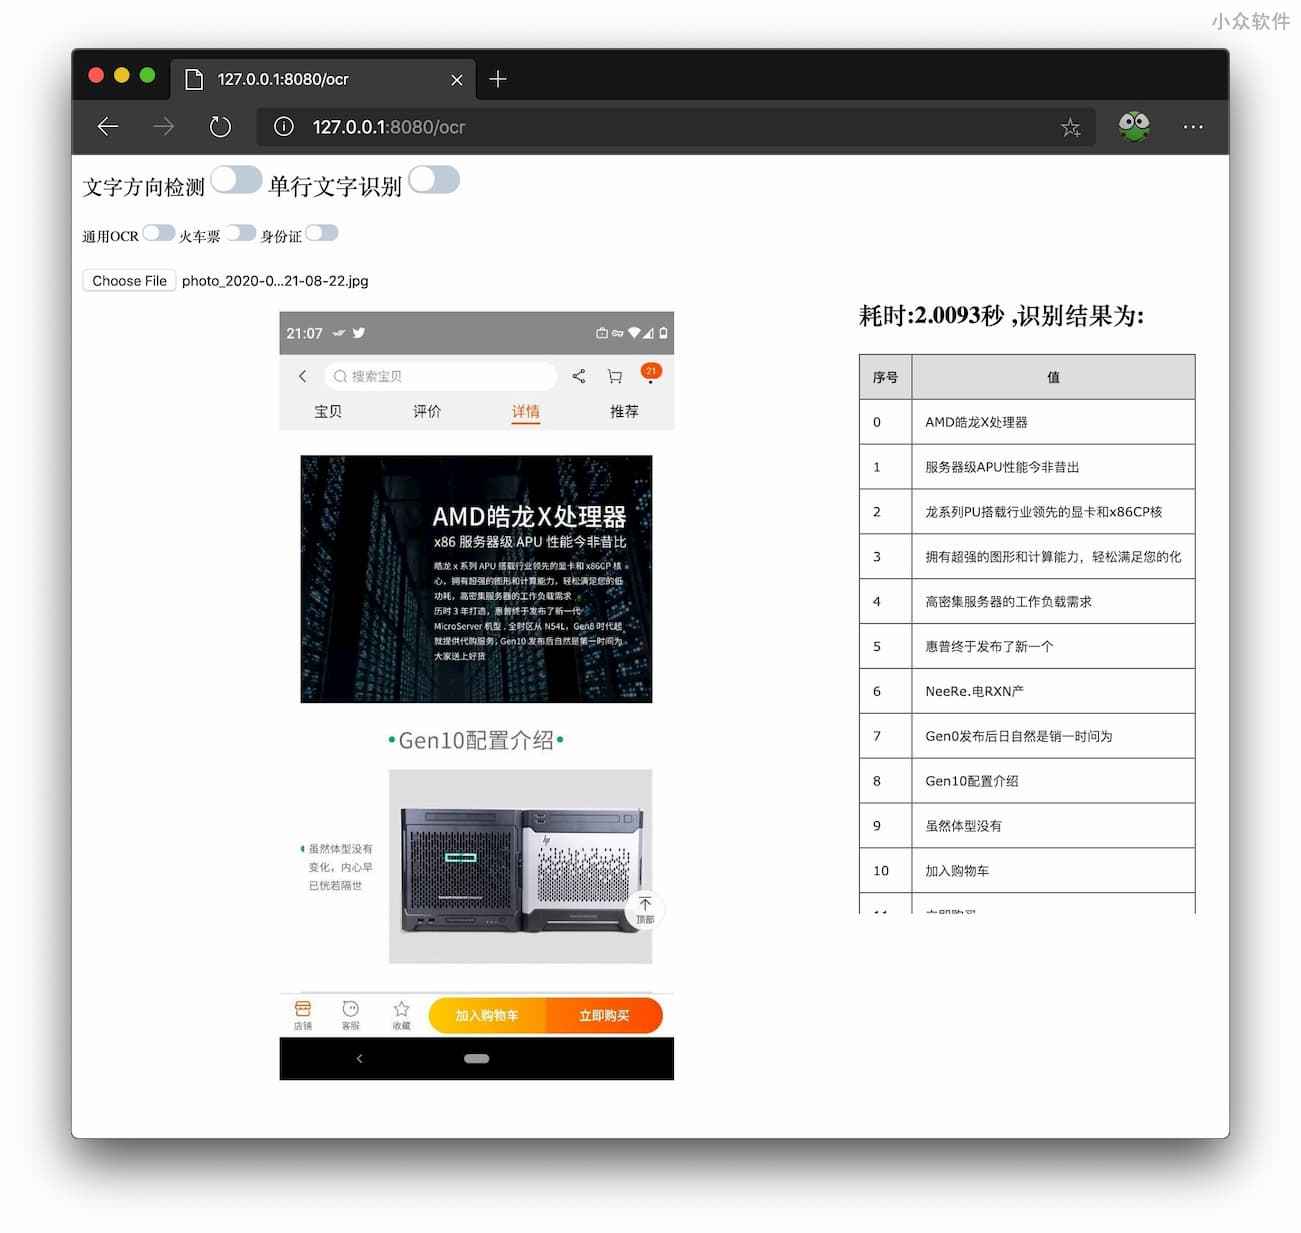 chineseocr_lite - 超轻量级中文 OCR，本地文字识别工具 3